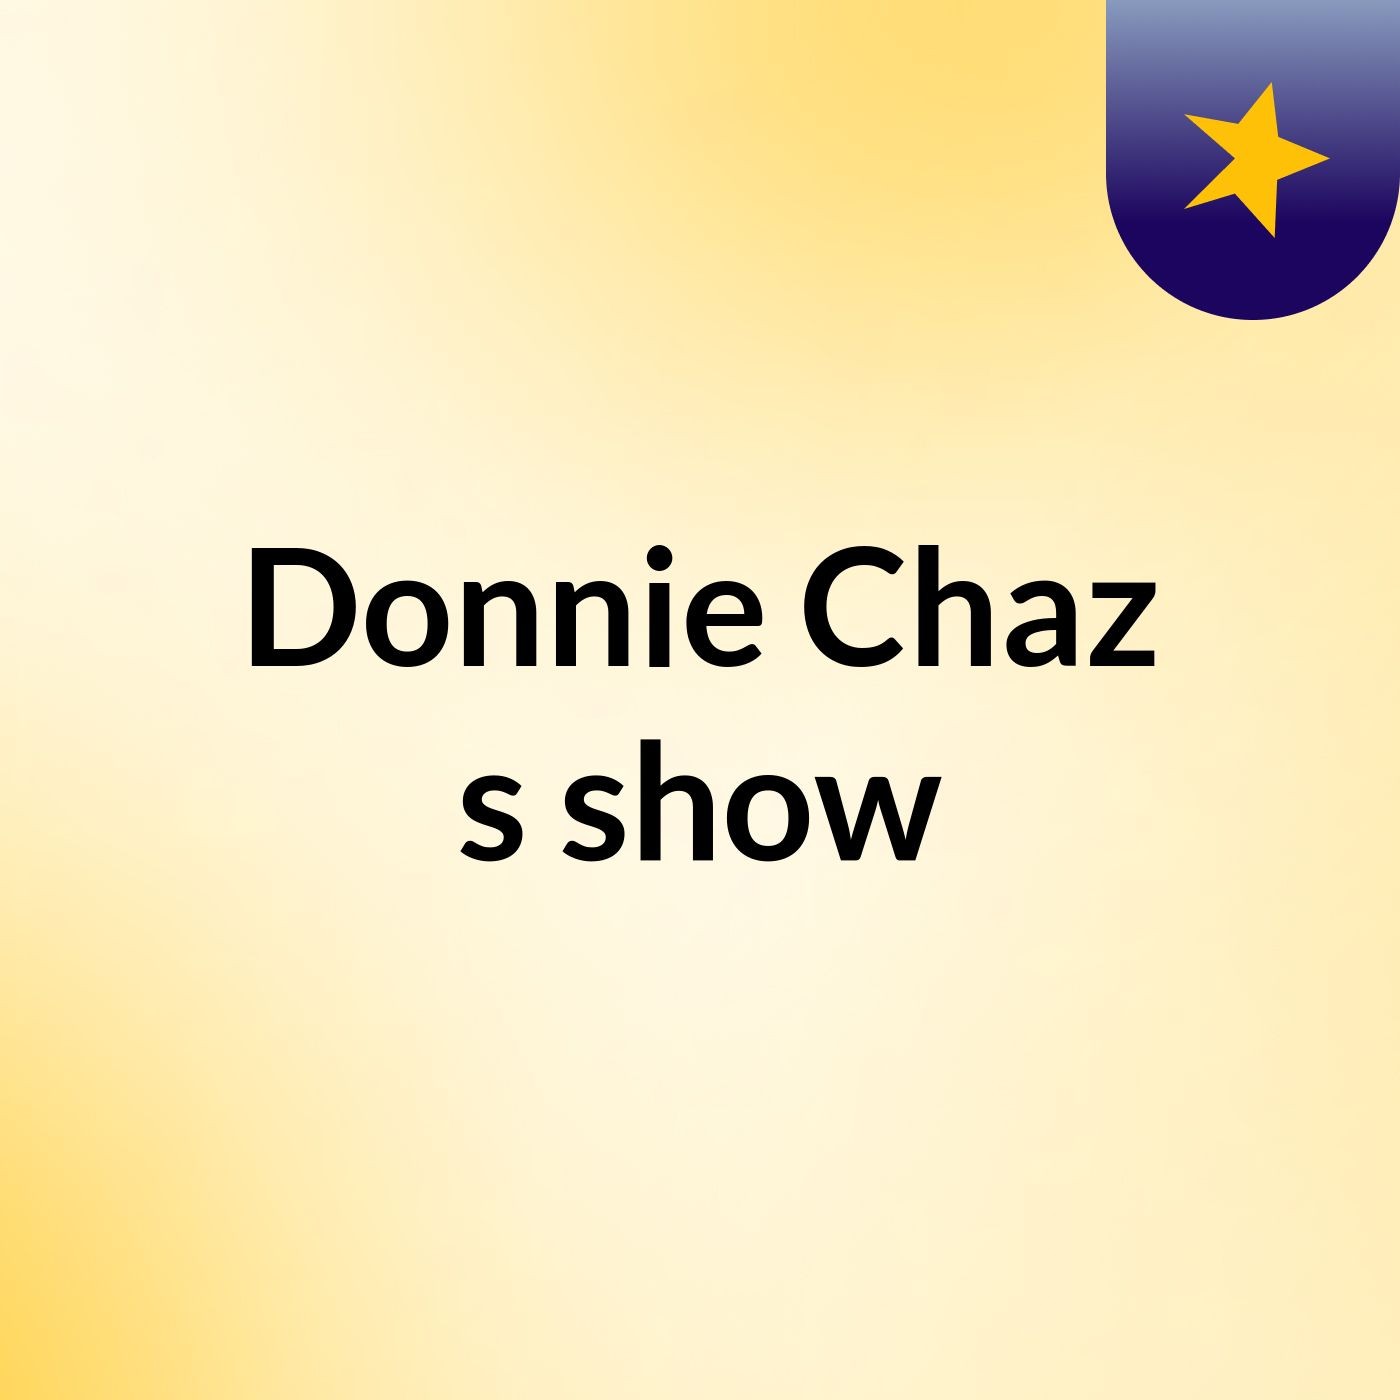 Donnie Chaz's show